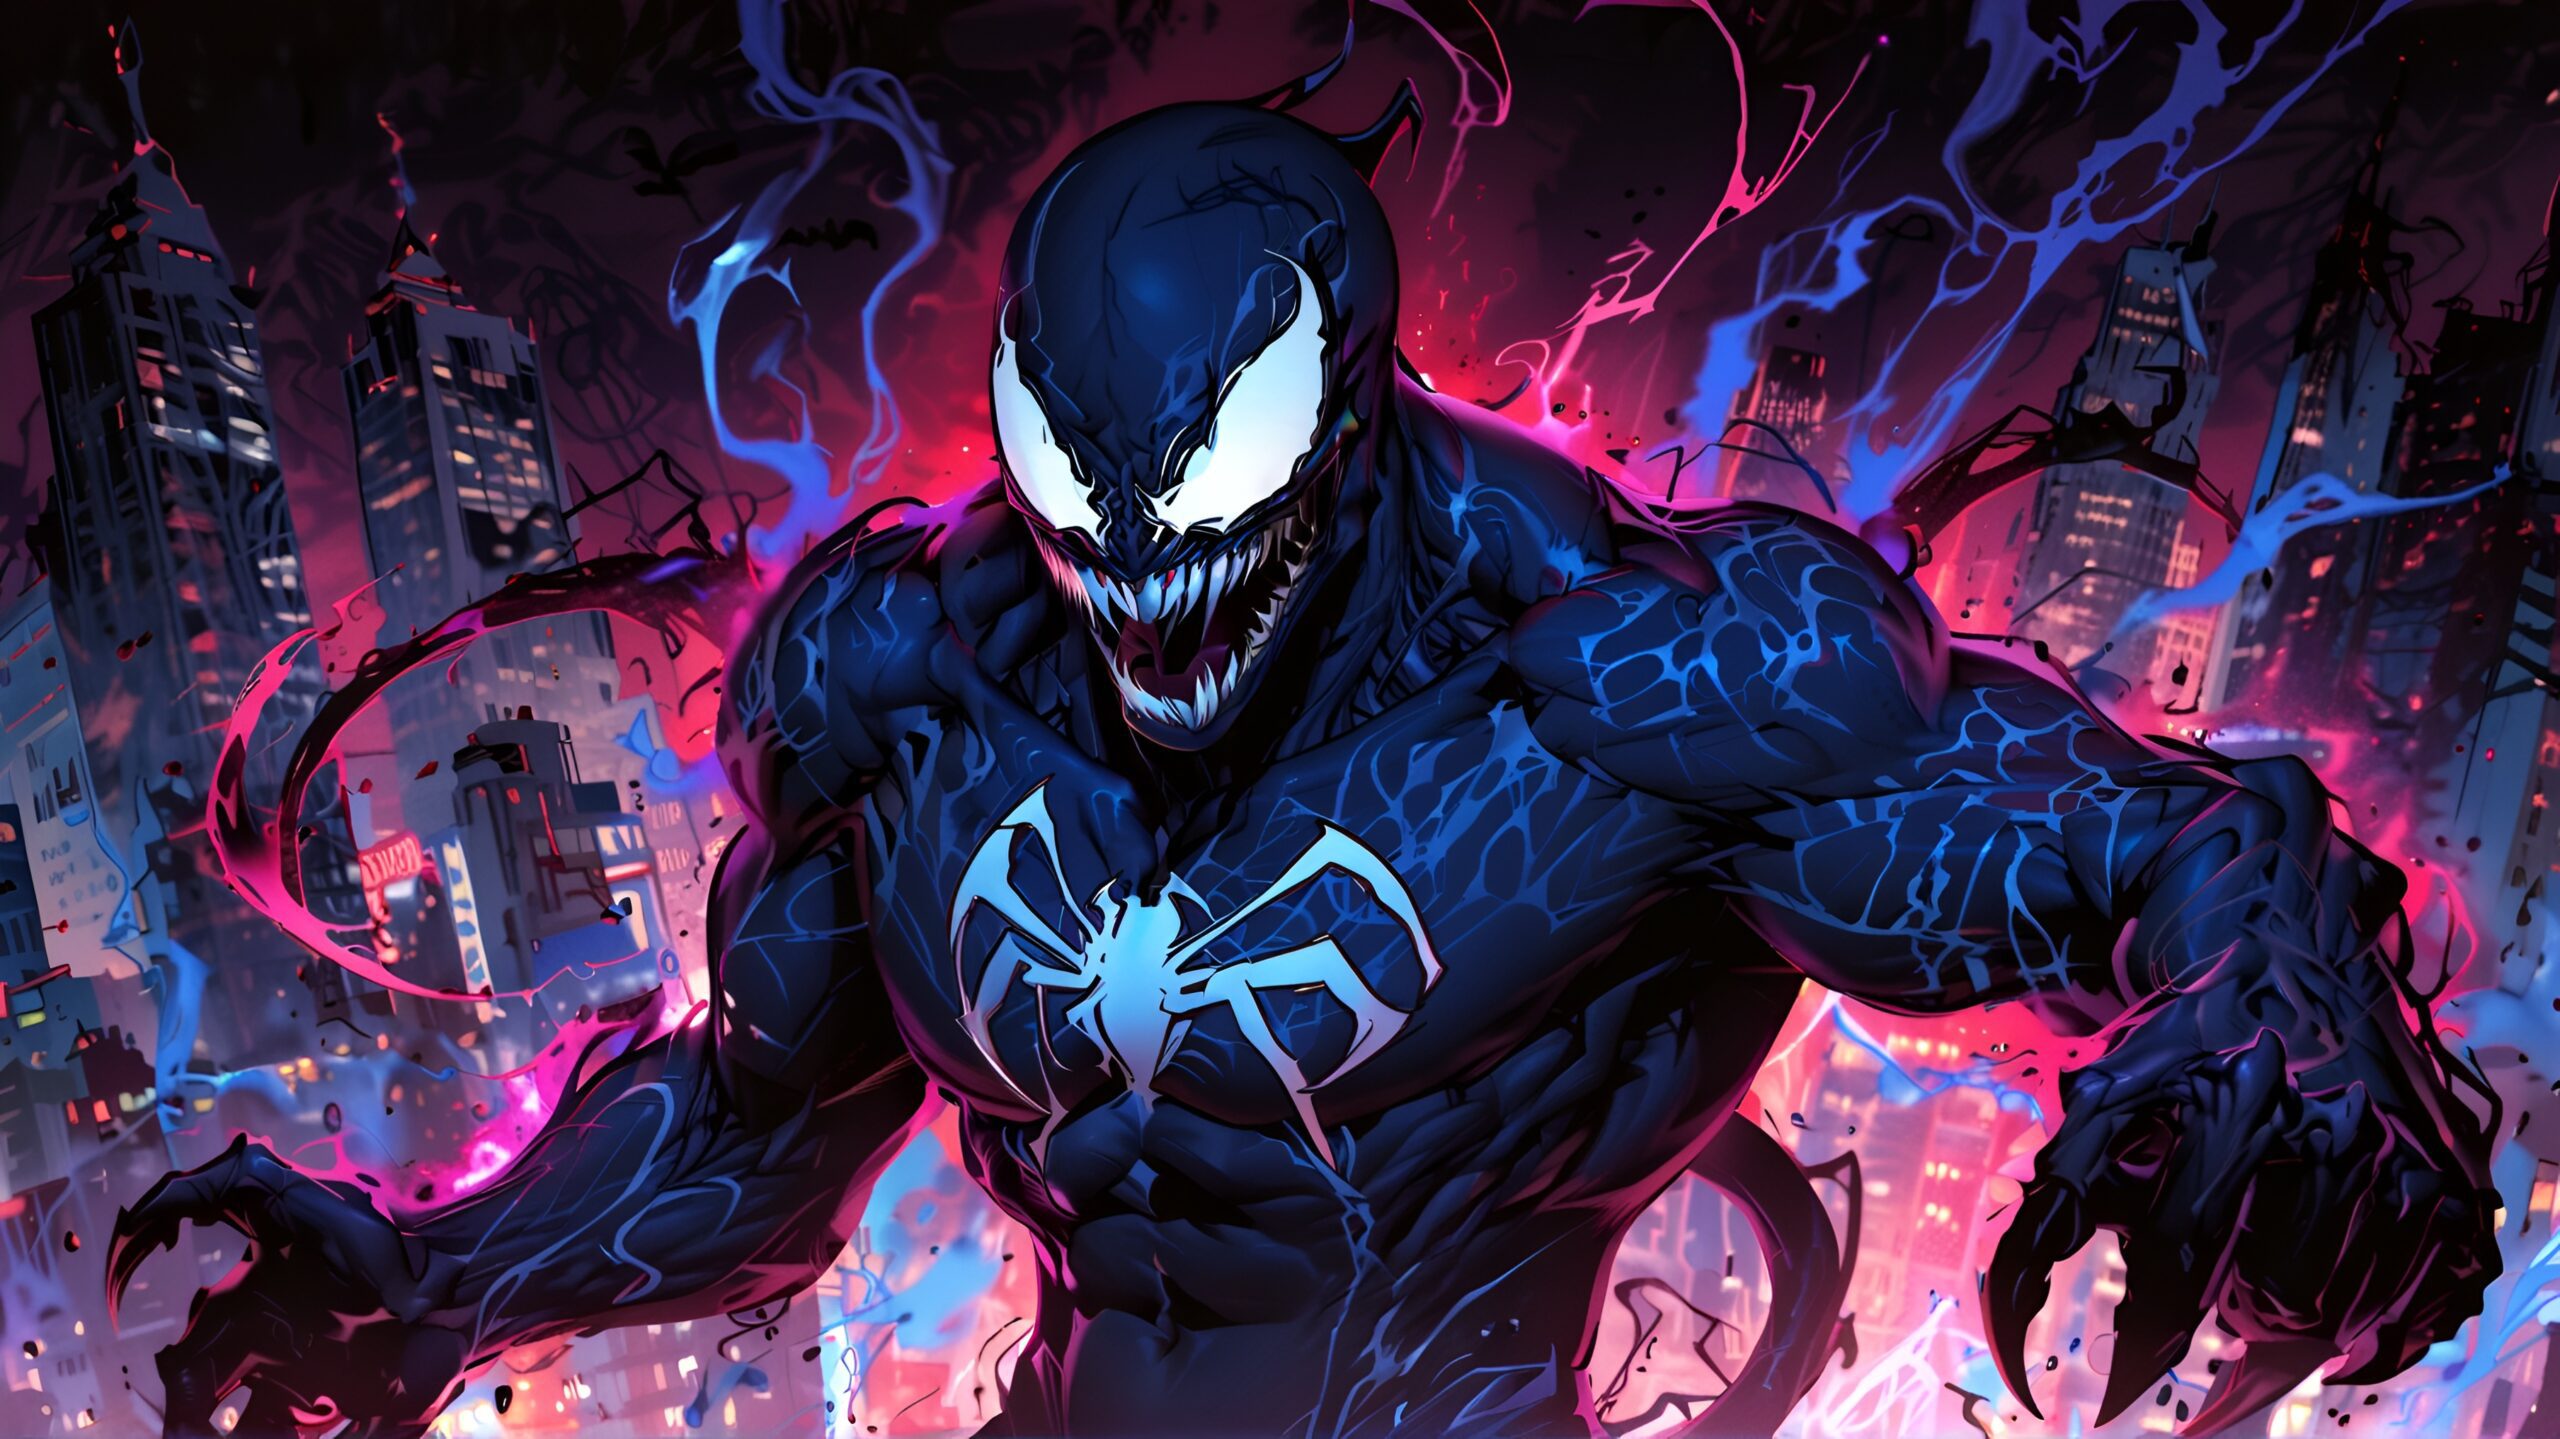 Venom drawing